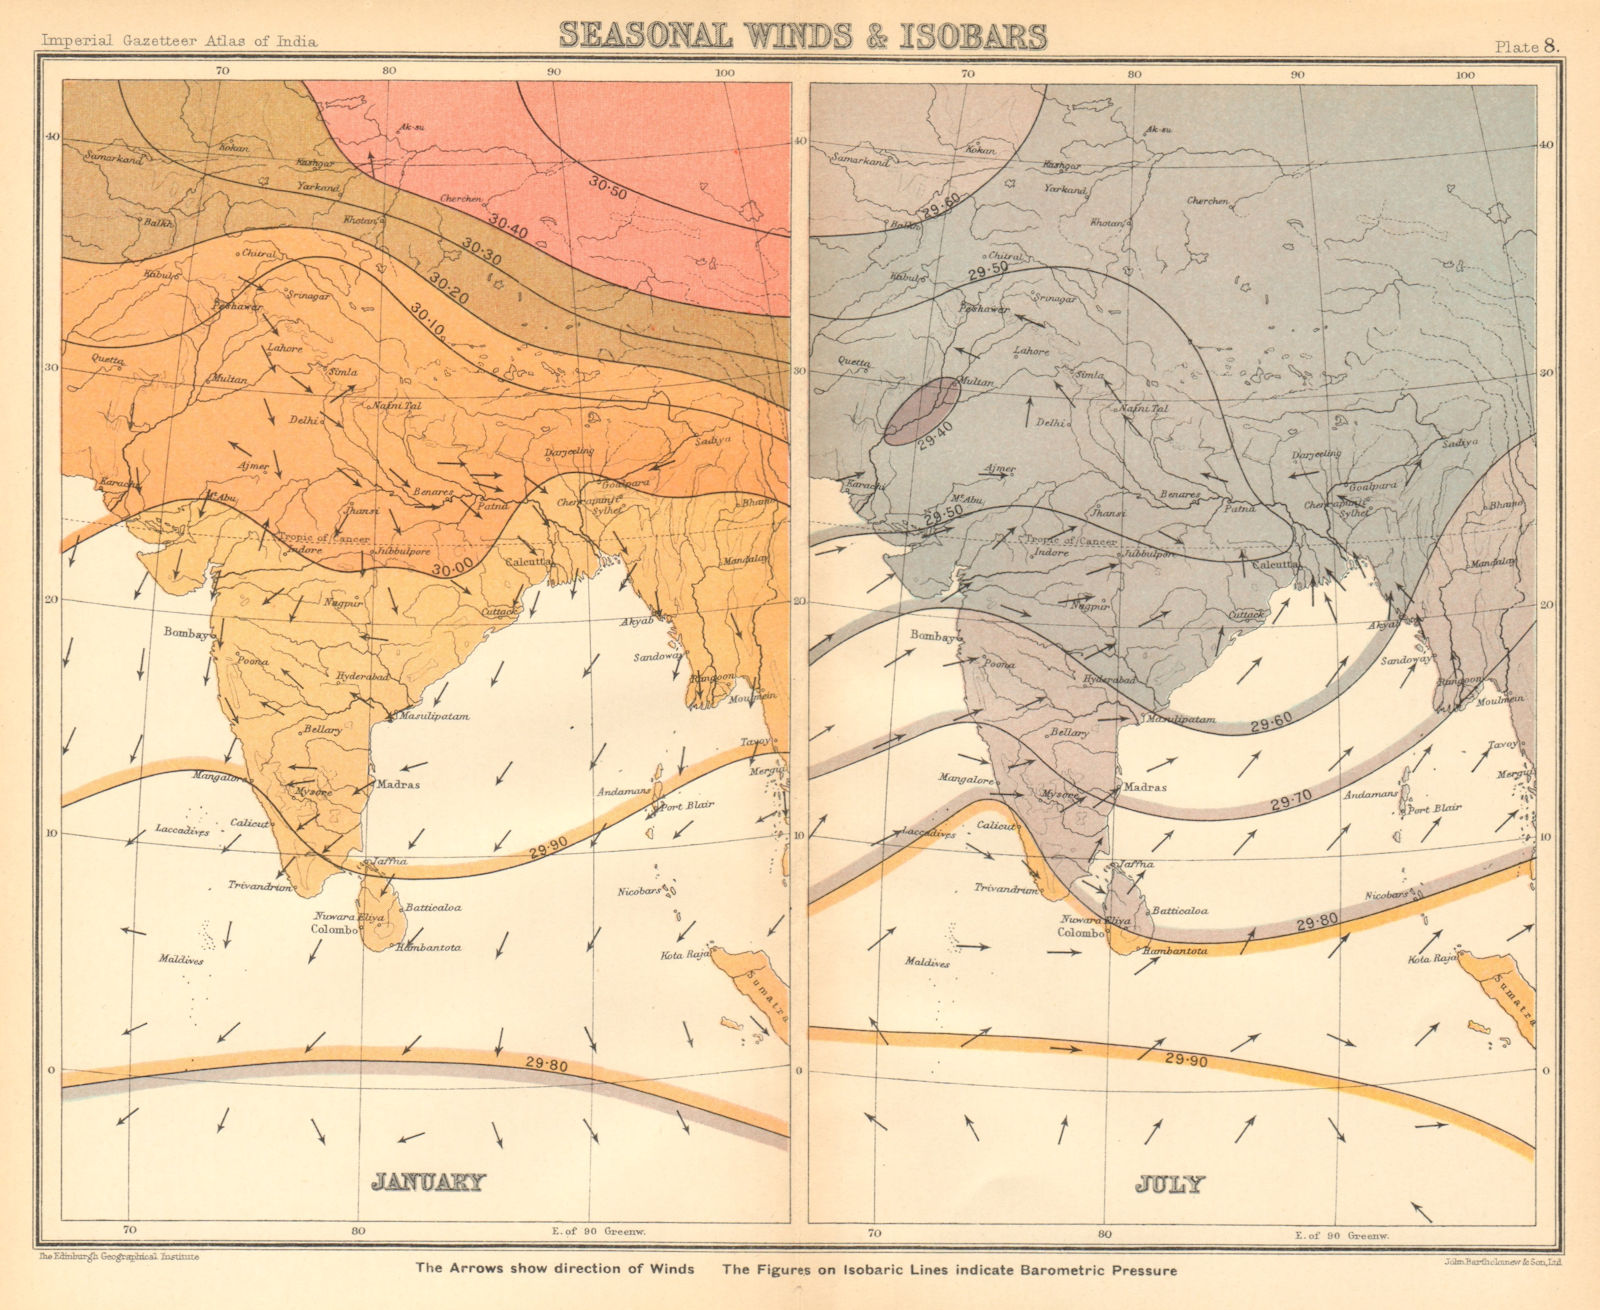 SOUTH ASIA. British India. Seasonal Winds and Isobars - January & July 1931 map